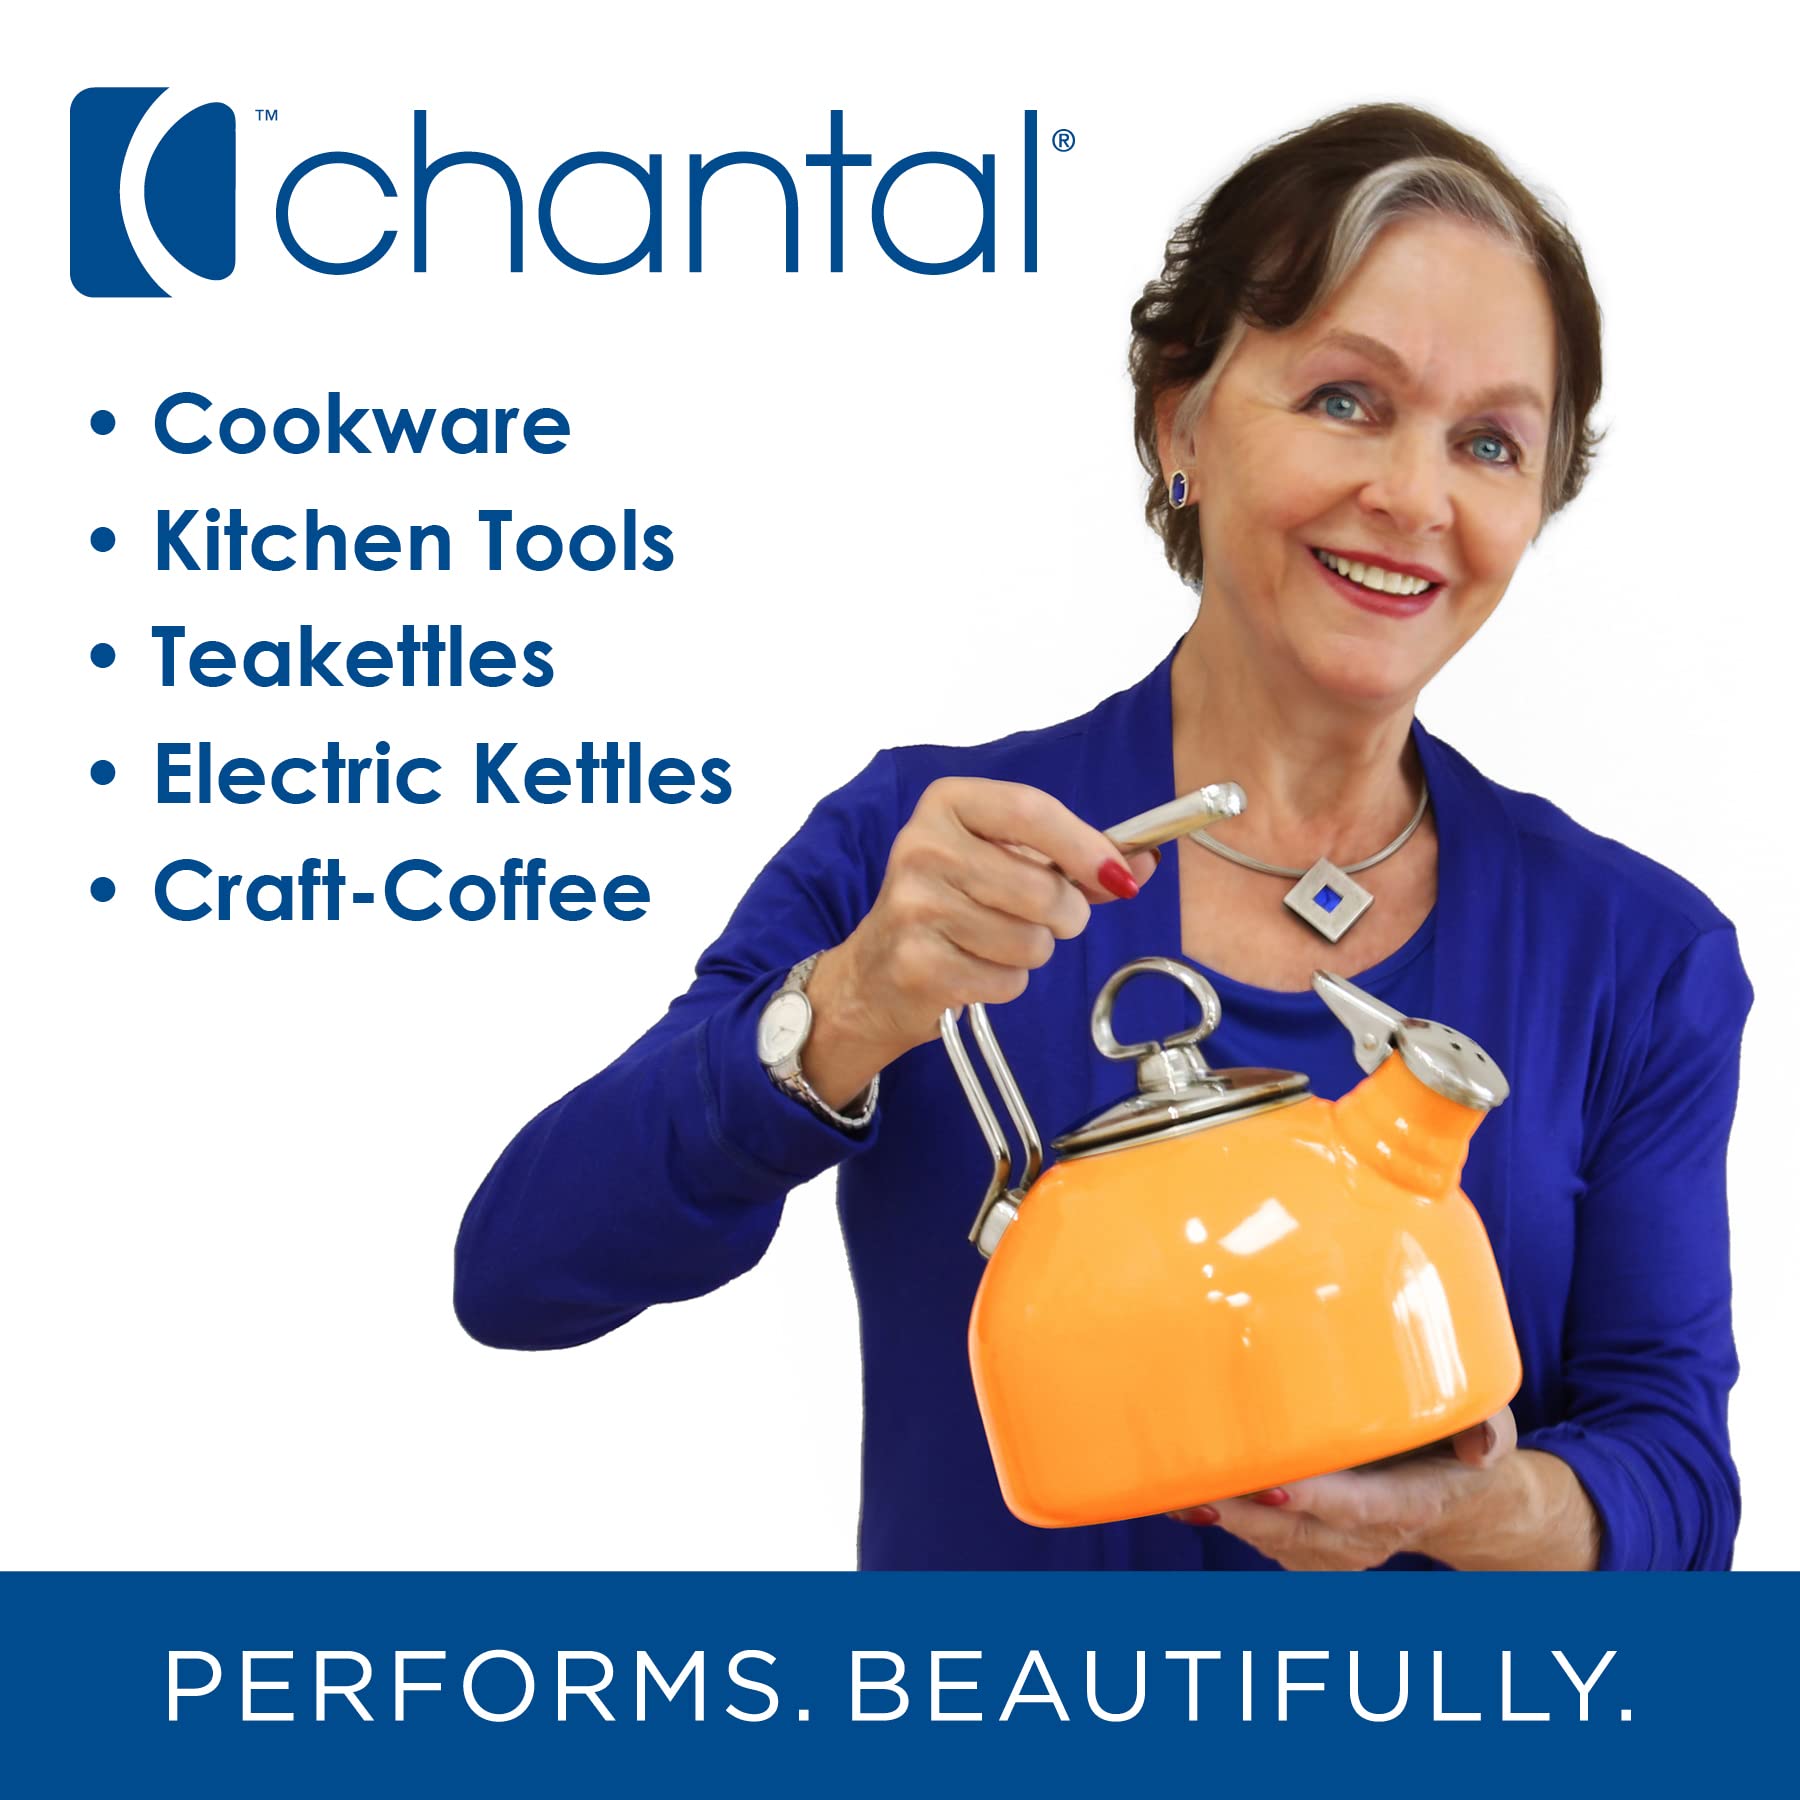 Chantal Tea Kettle, Carina Series, 1.8 QT, Premium Enamel on Carbon Steel, Whistling, Even Heating & Quick Boil, White